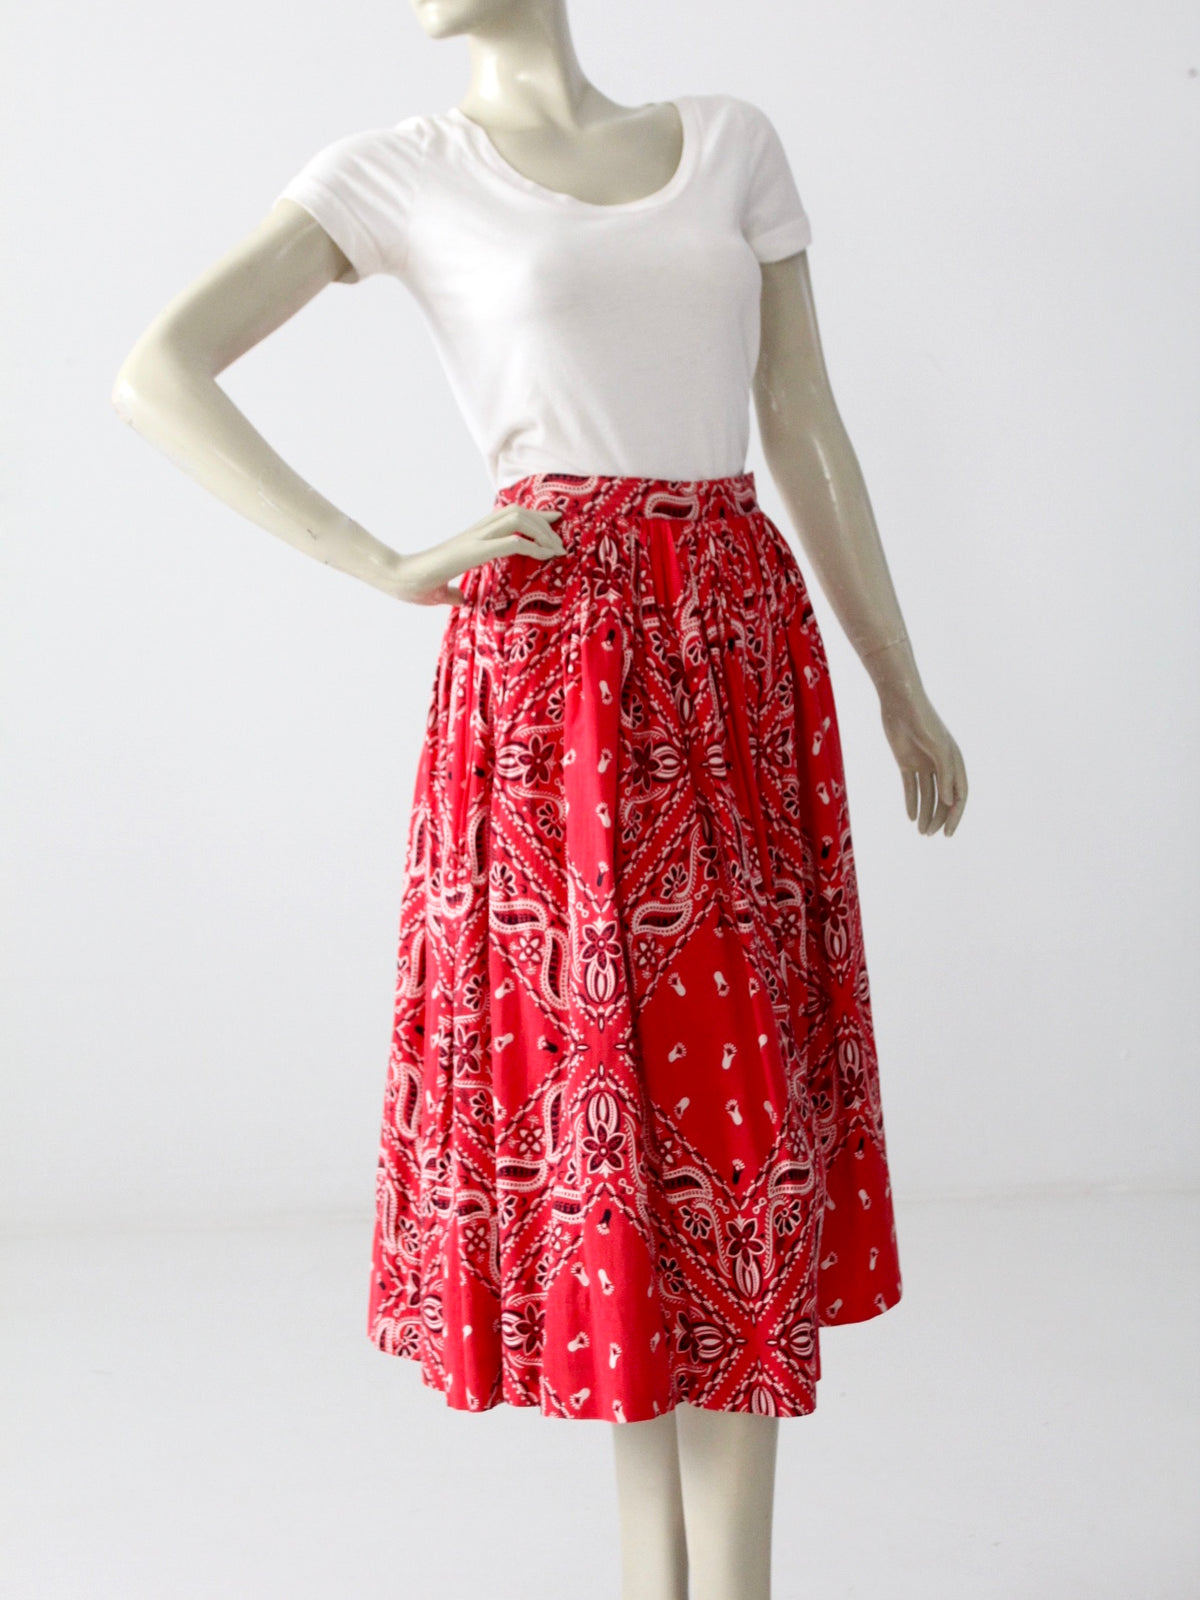 vintage 50s full skirt with bandana print